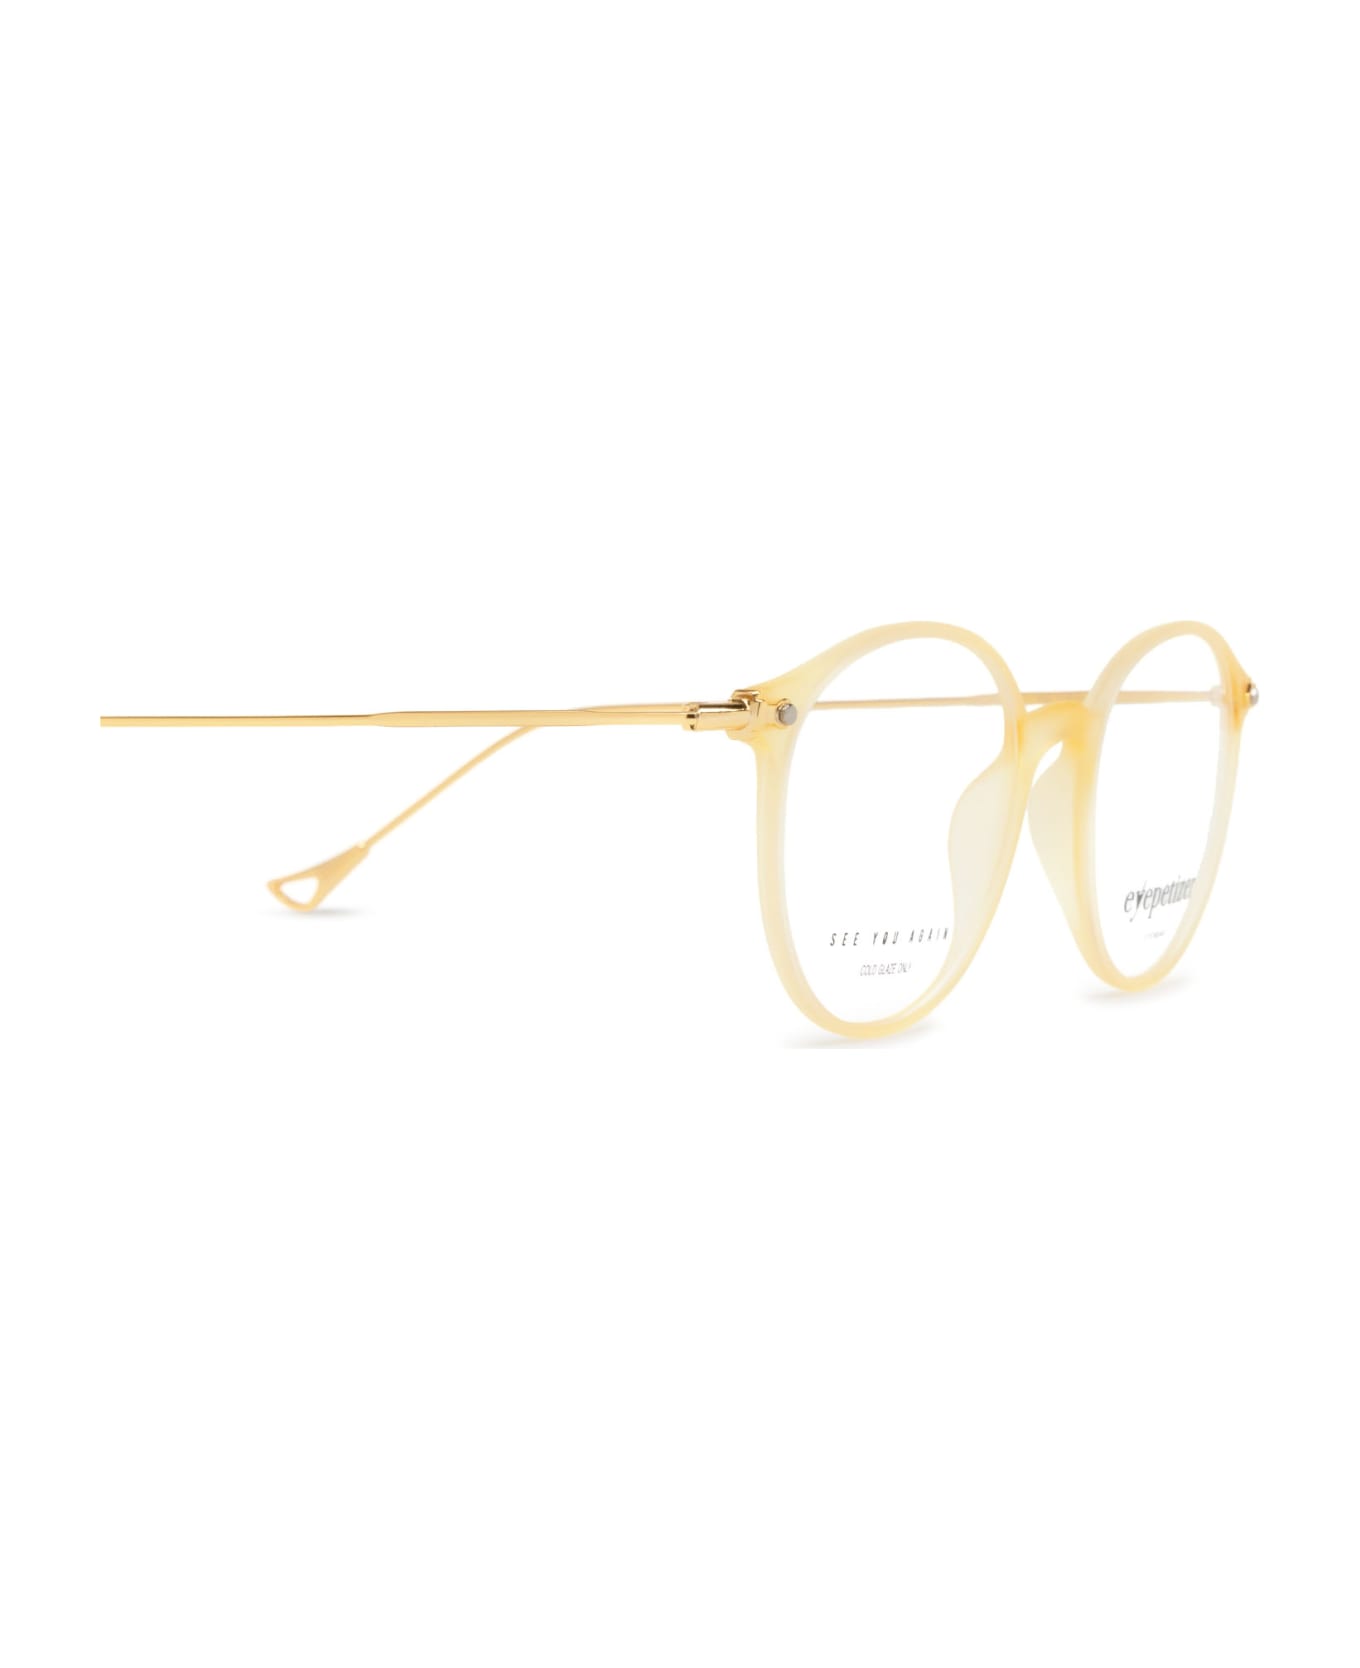 Eyepetizer Nic Optical Transparent Yellow Glasses - Transparent Yellow